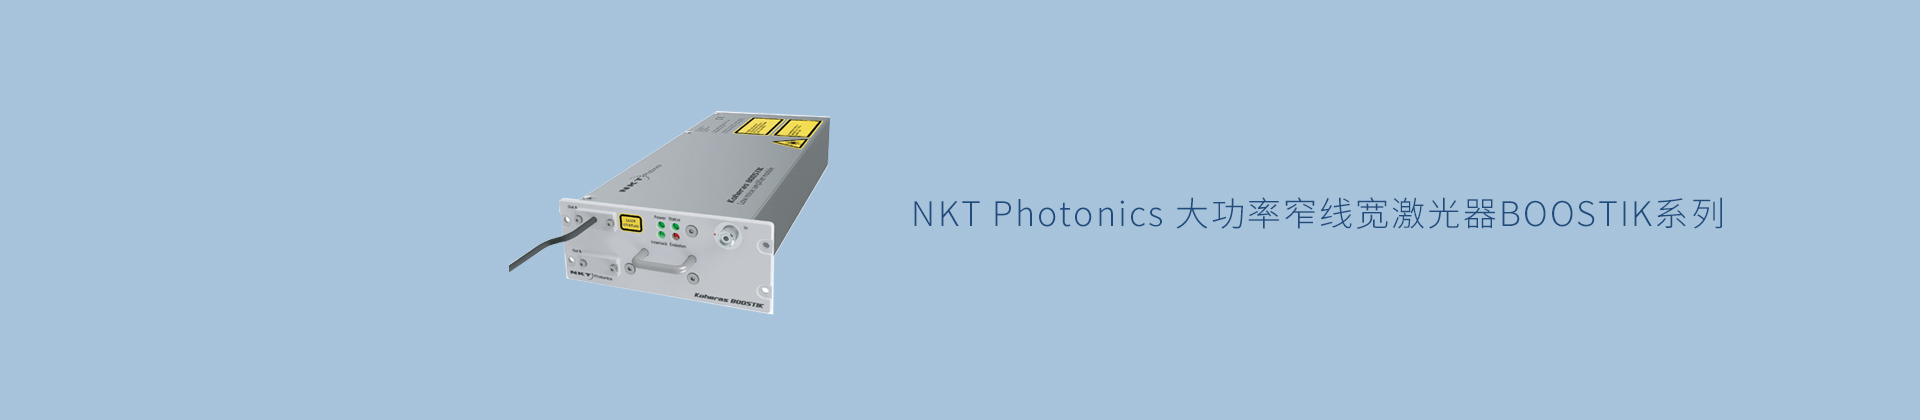 NKT Photonics 大功率窄线宽激光器BOOSTIK系列